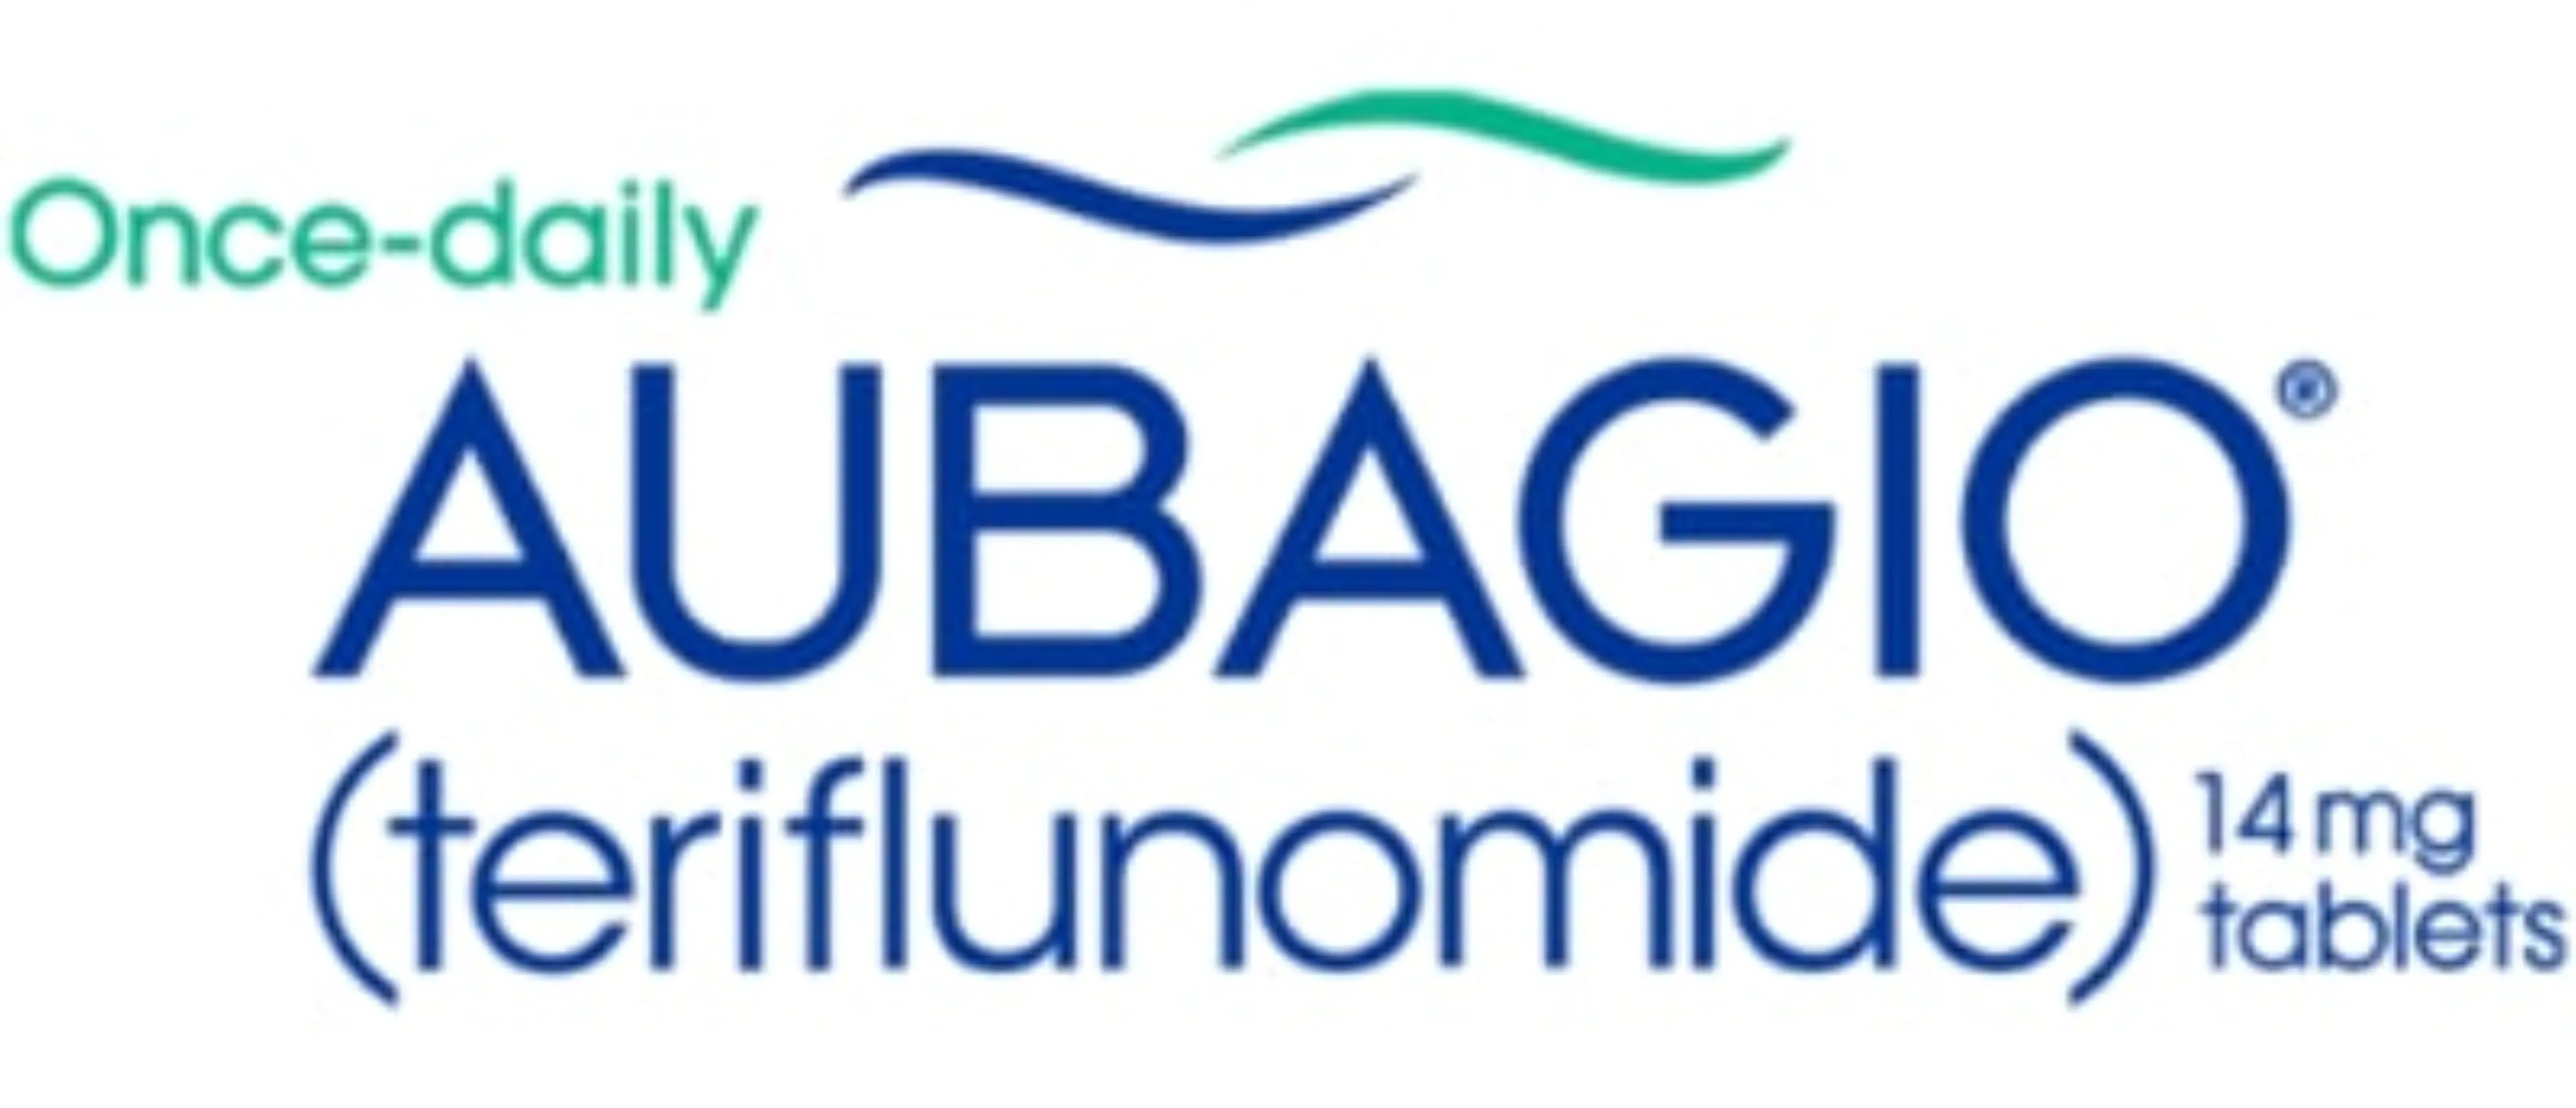  Once-daily Aubagio (teriflunomide) 14 mg tablets logo